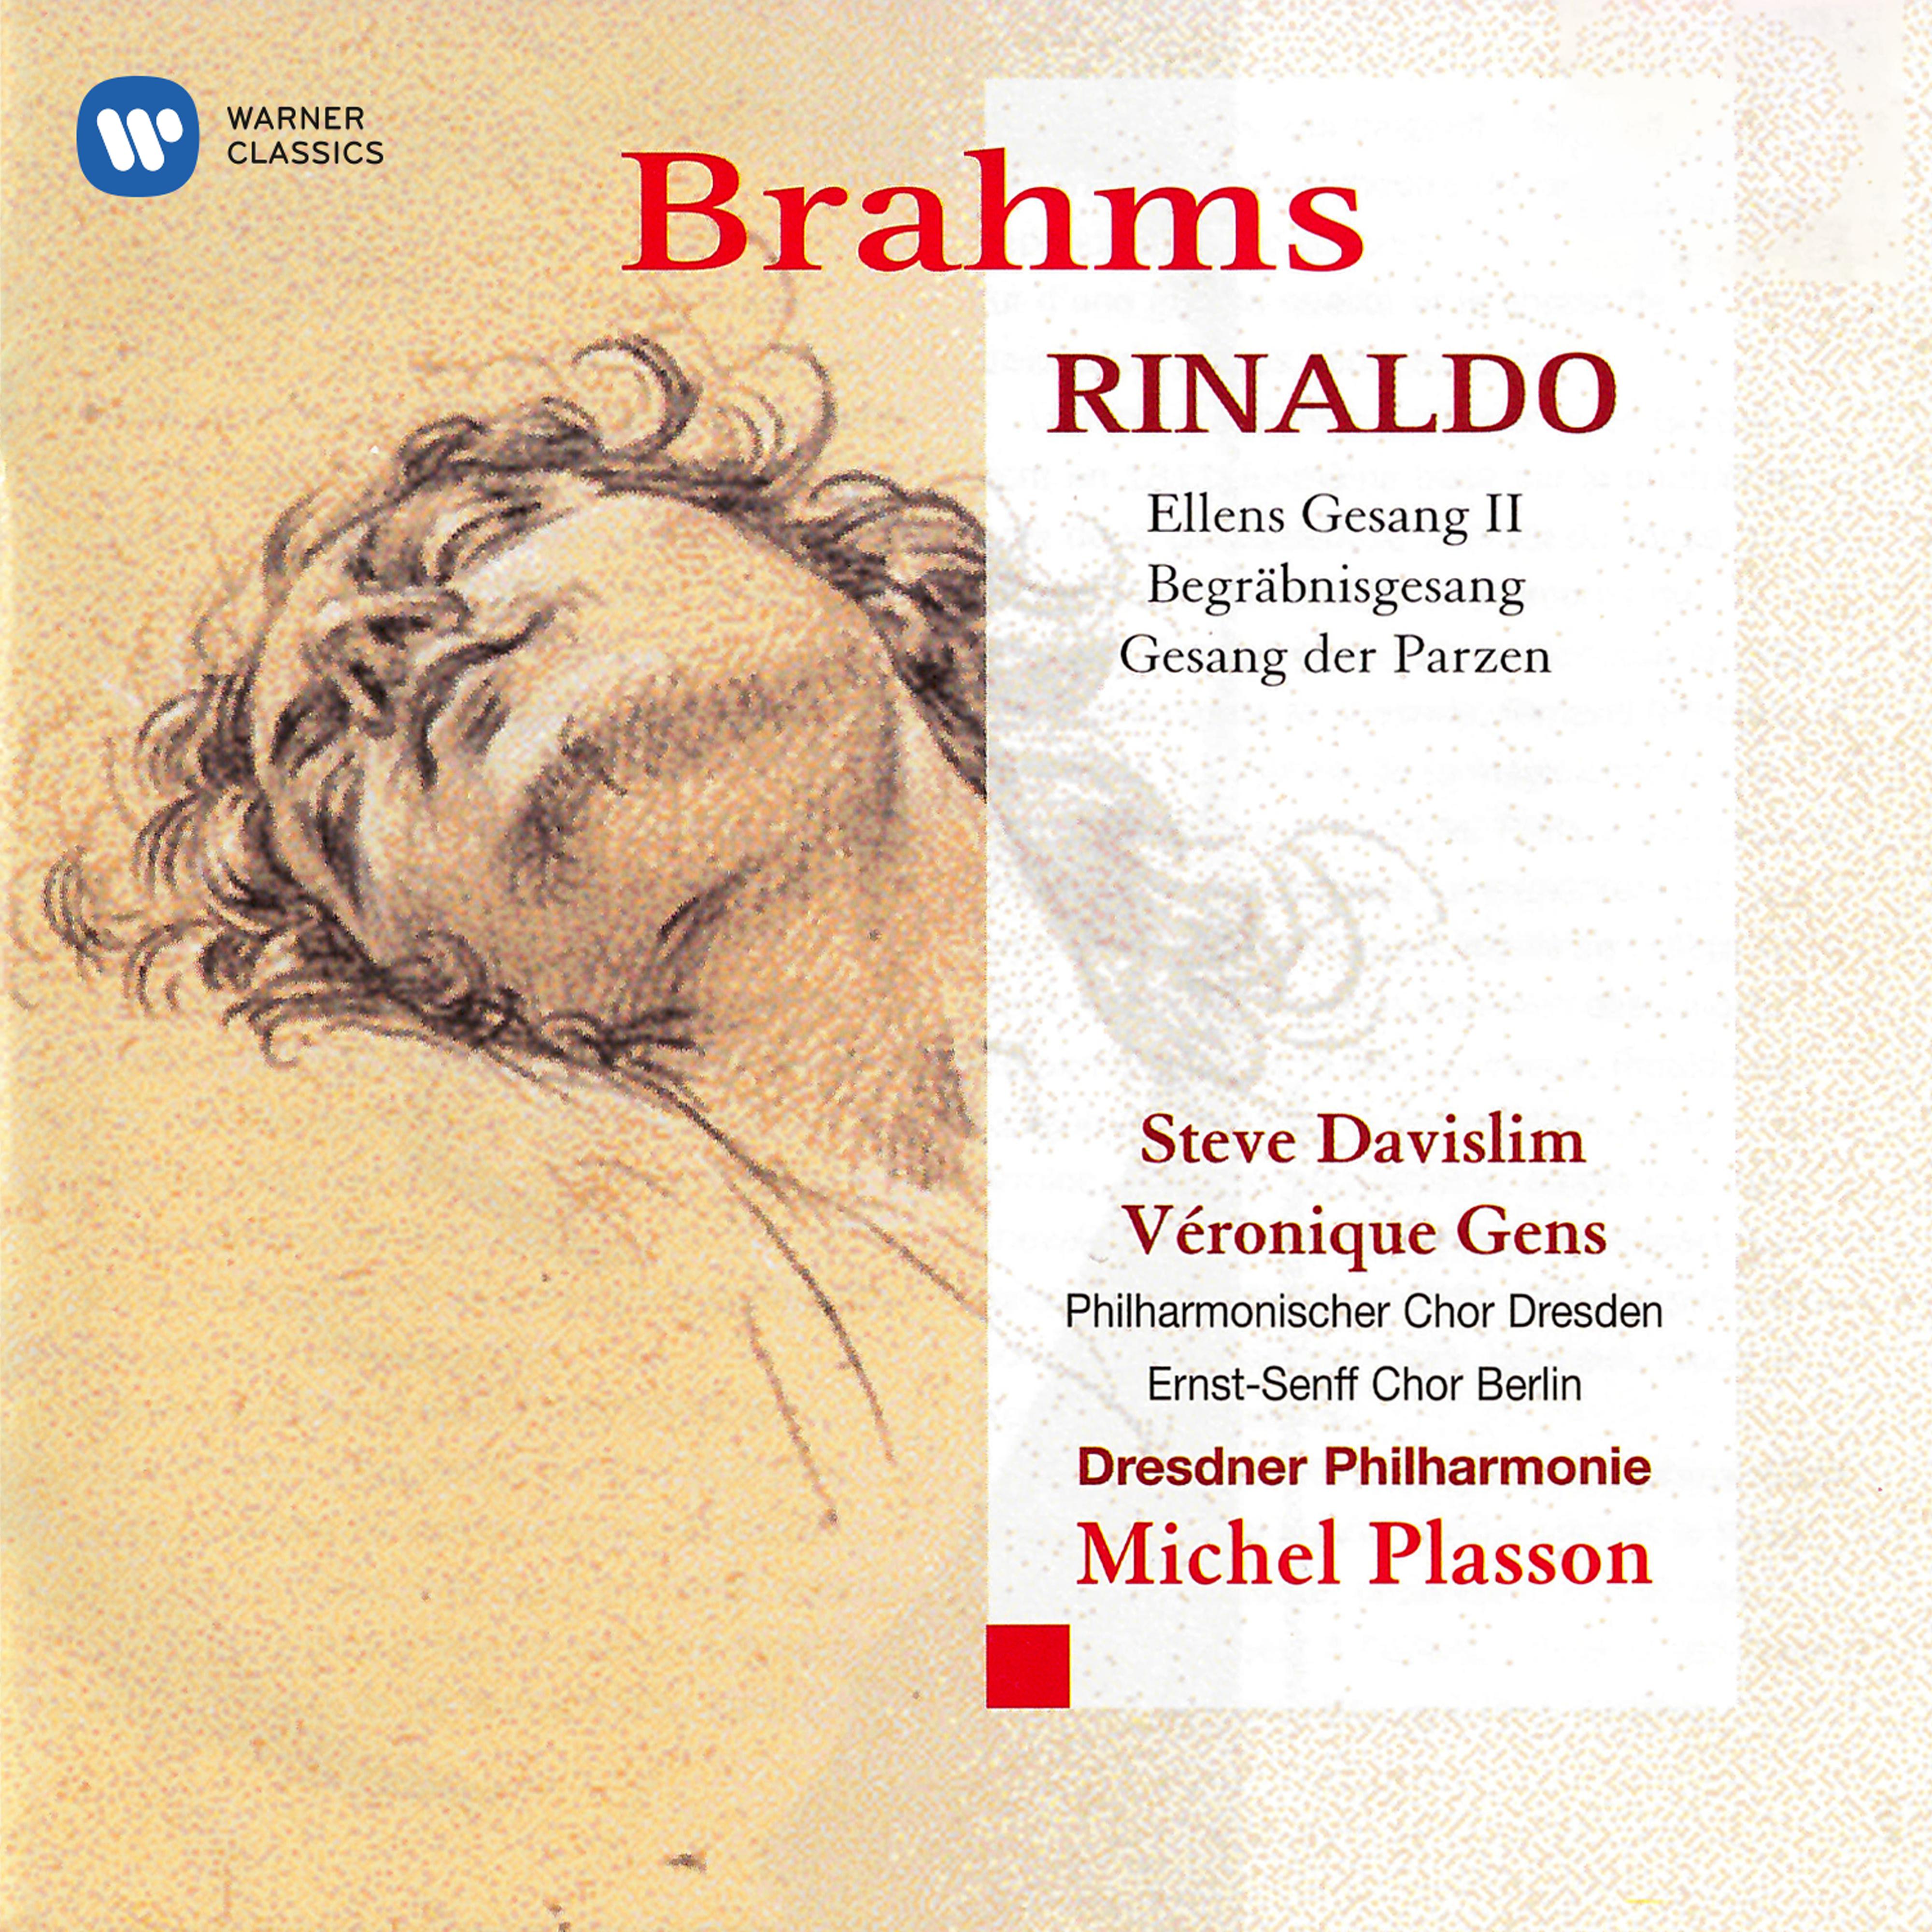 Brahms: Rinaldo, Ellens Gesang II, Begr bnisgesang  Gesang der Parzen